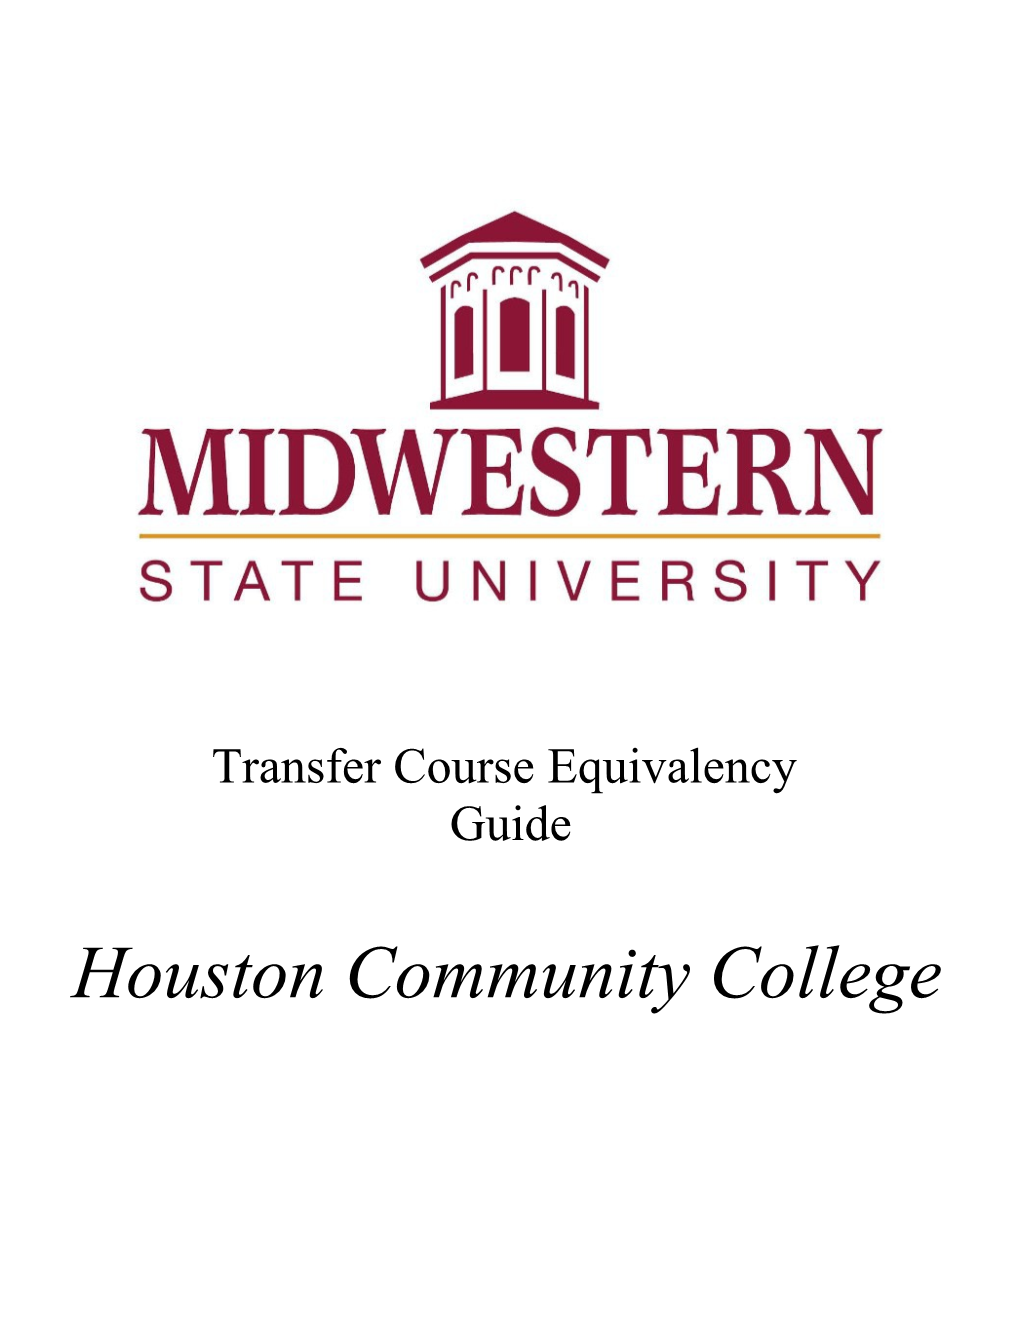 HCC (Coding at Houston Community College) MSU